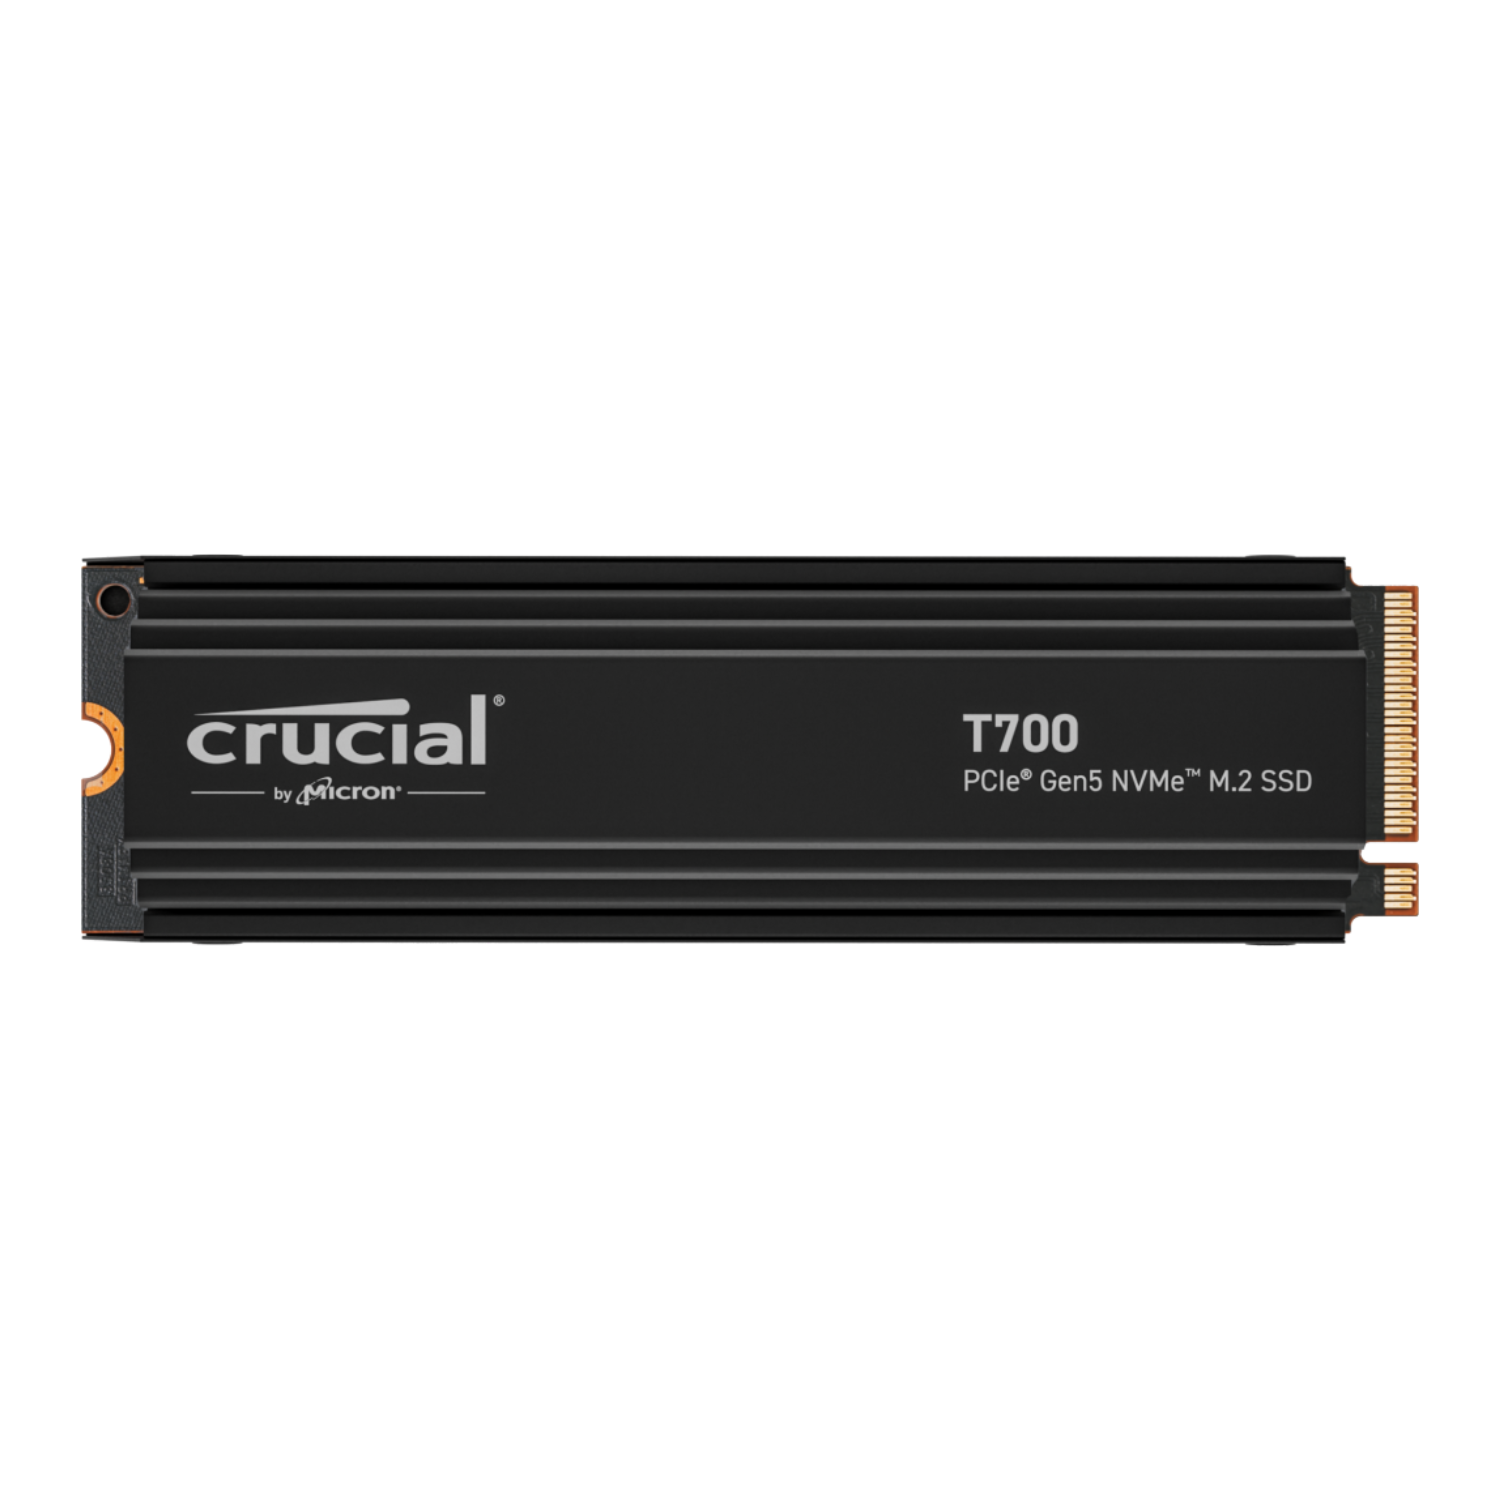 SSD Crucial T700 4TB PCIe Gen5 NVMe M.2 SSD with heatsink (CT4000T700SSD5)